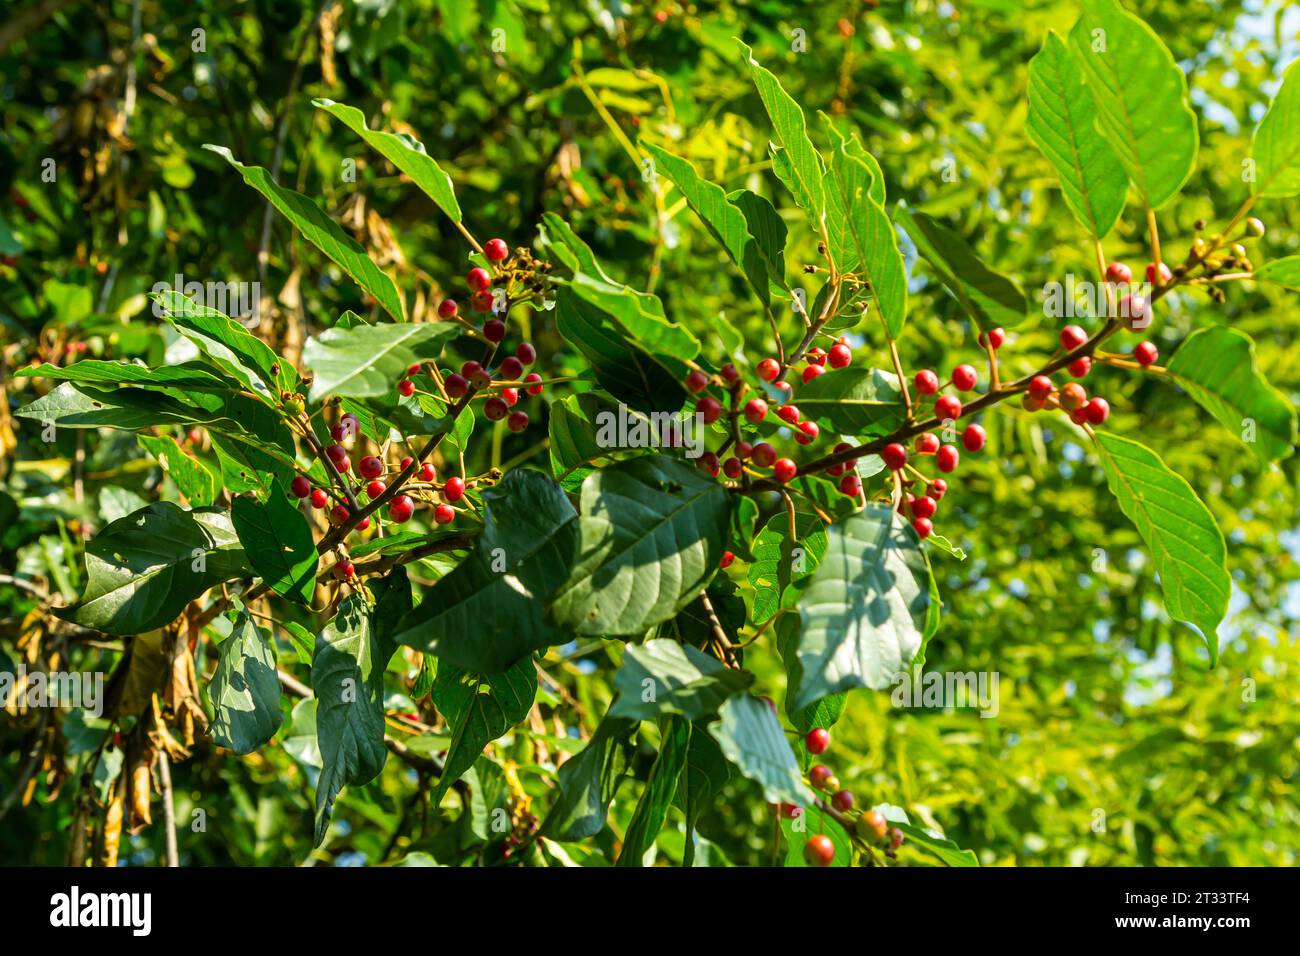 Branches of Frangula alnus with black and red berries. Fruits of Frangula alnus. Stock Photo